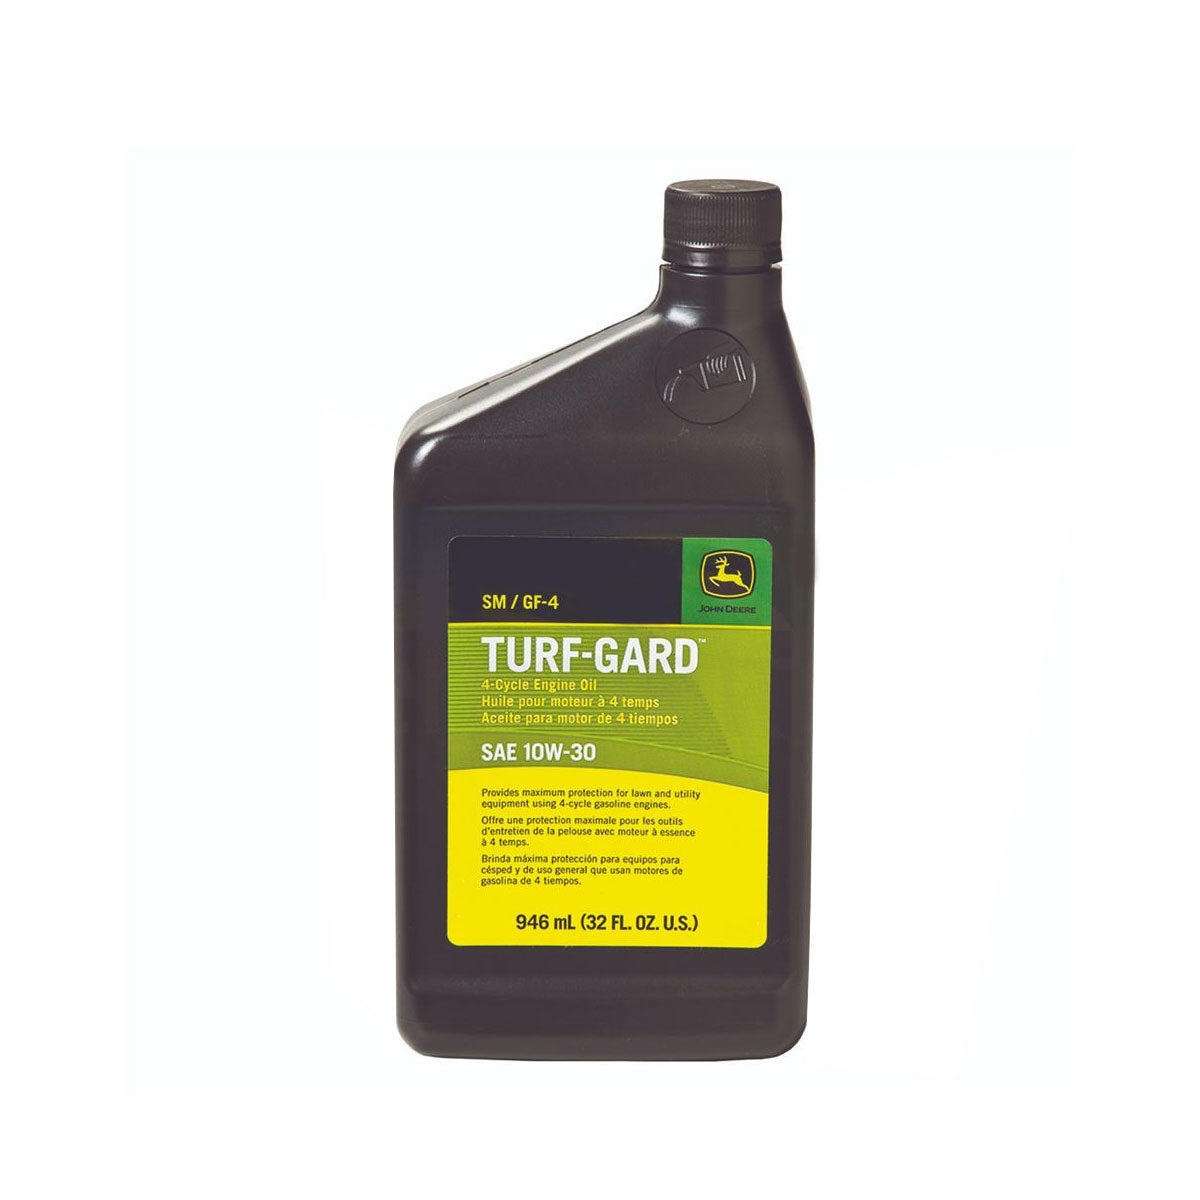 John Deere Turf-Gard Engine Oil 10W/30 1L